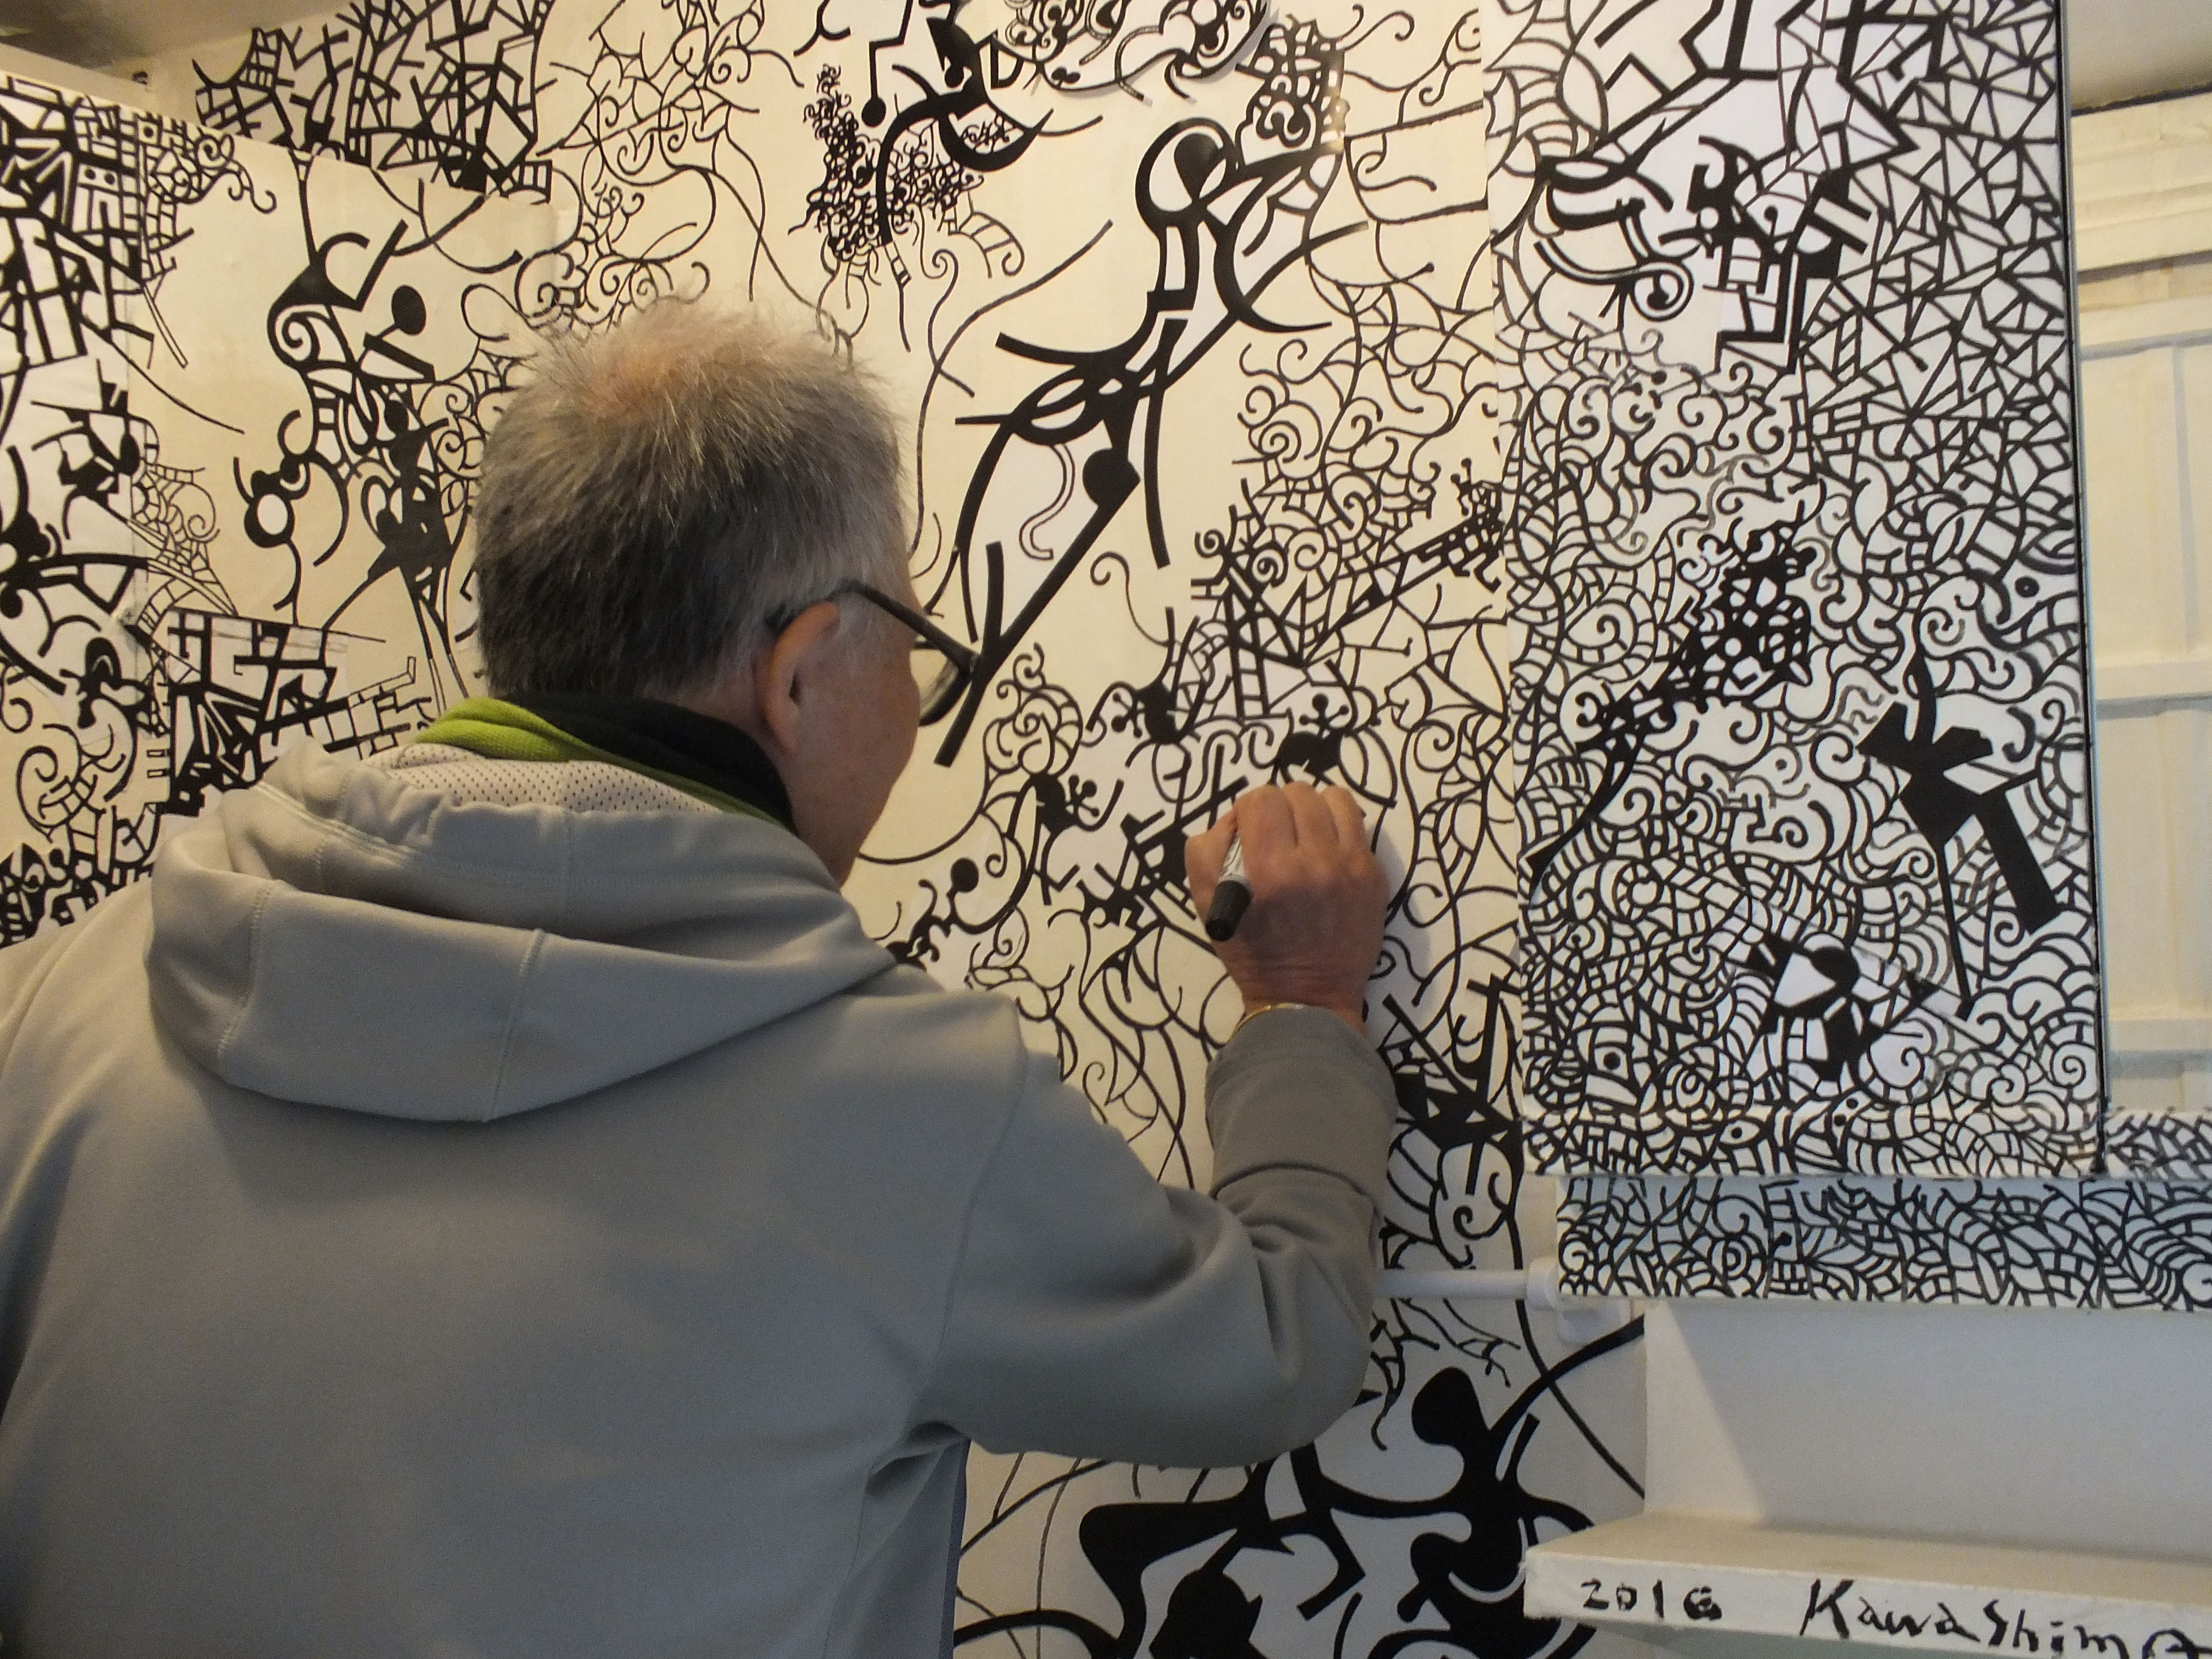 Born again: Artist Takeshi Kawashima puts the finishing touches to his work 'Kaleidoscope Black and White' on Ogijima Island. Until recently facing a shrinking, aging population, Ogijima is growing thanks to its thriving community-based art scene. | DAVID BILLA